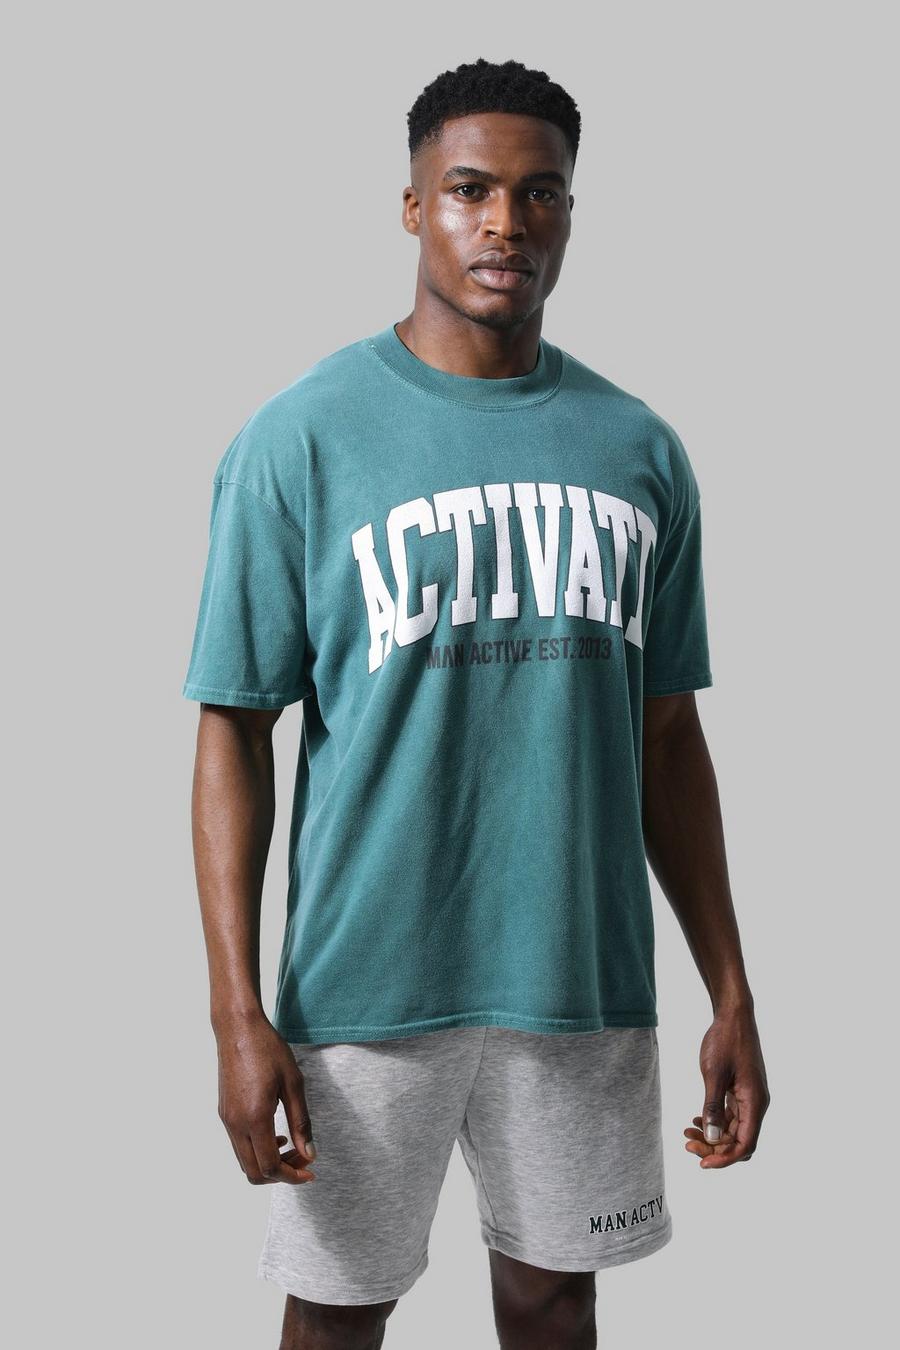 Man Active Activate T-Shirt, Teal green